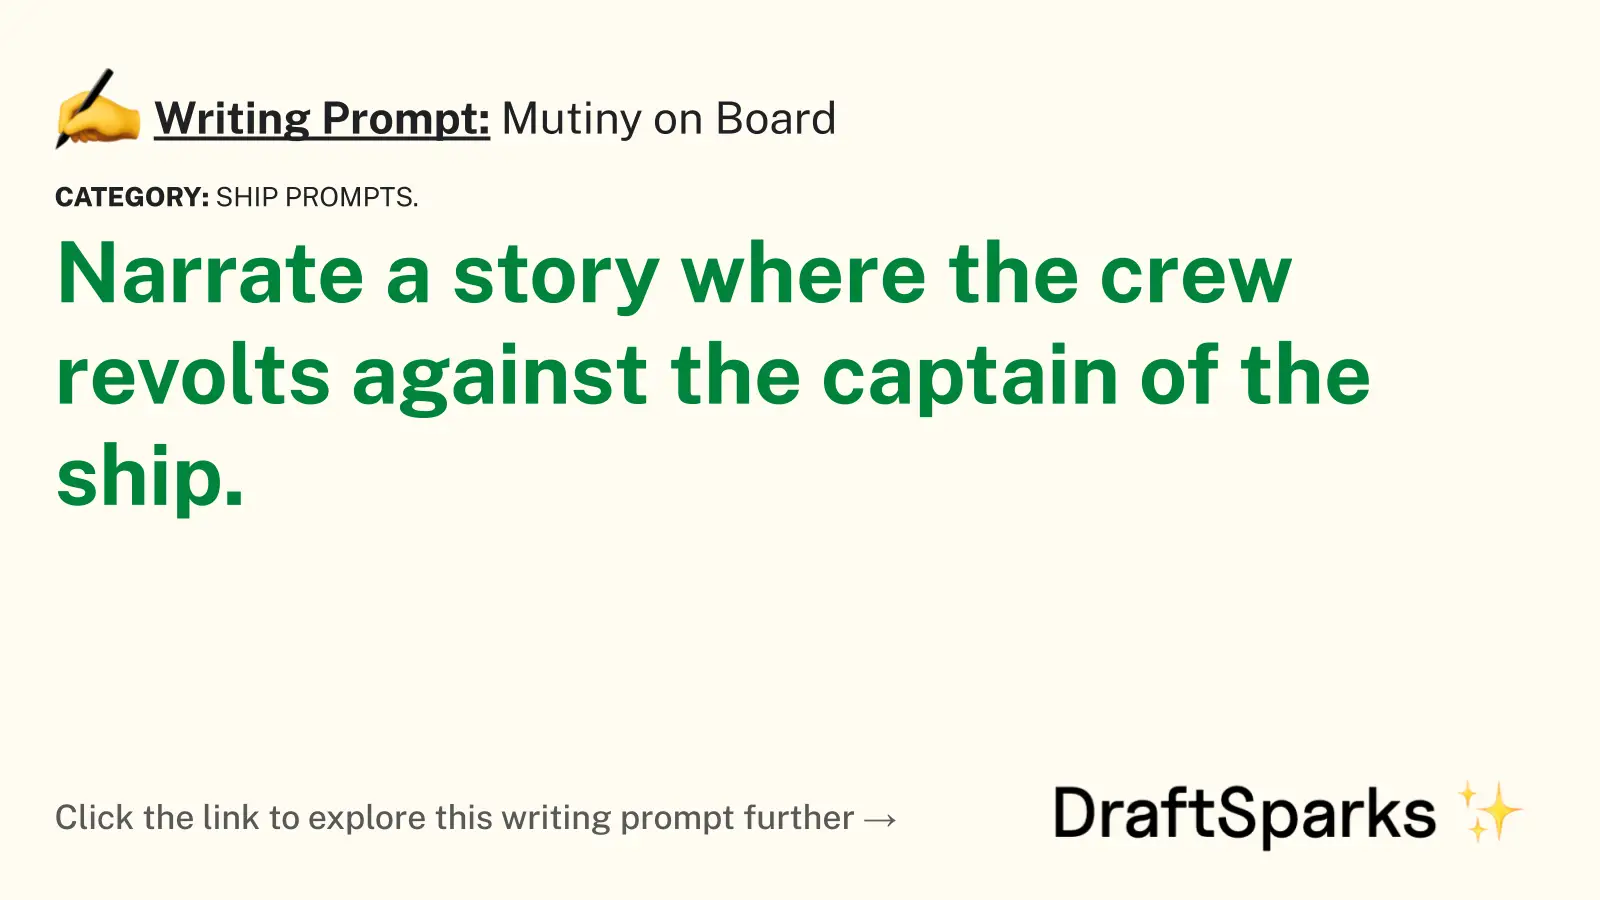 Mutiny on Board